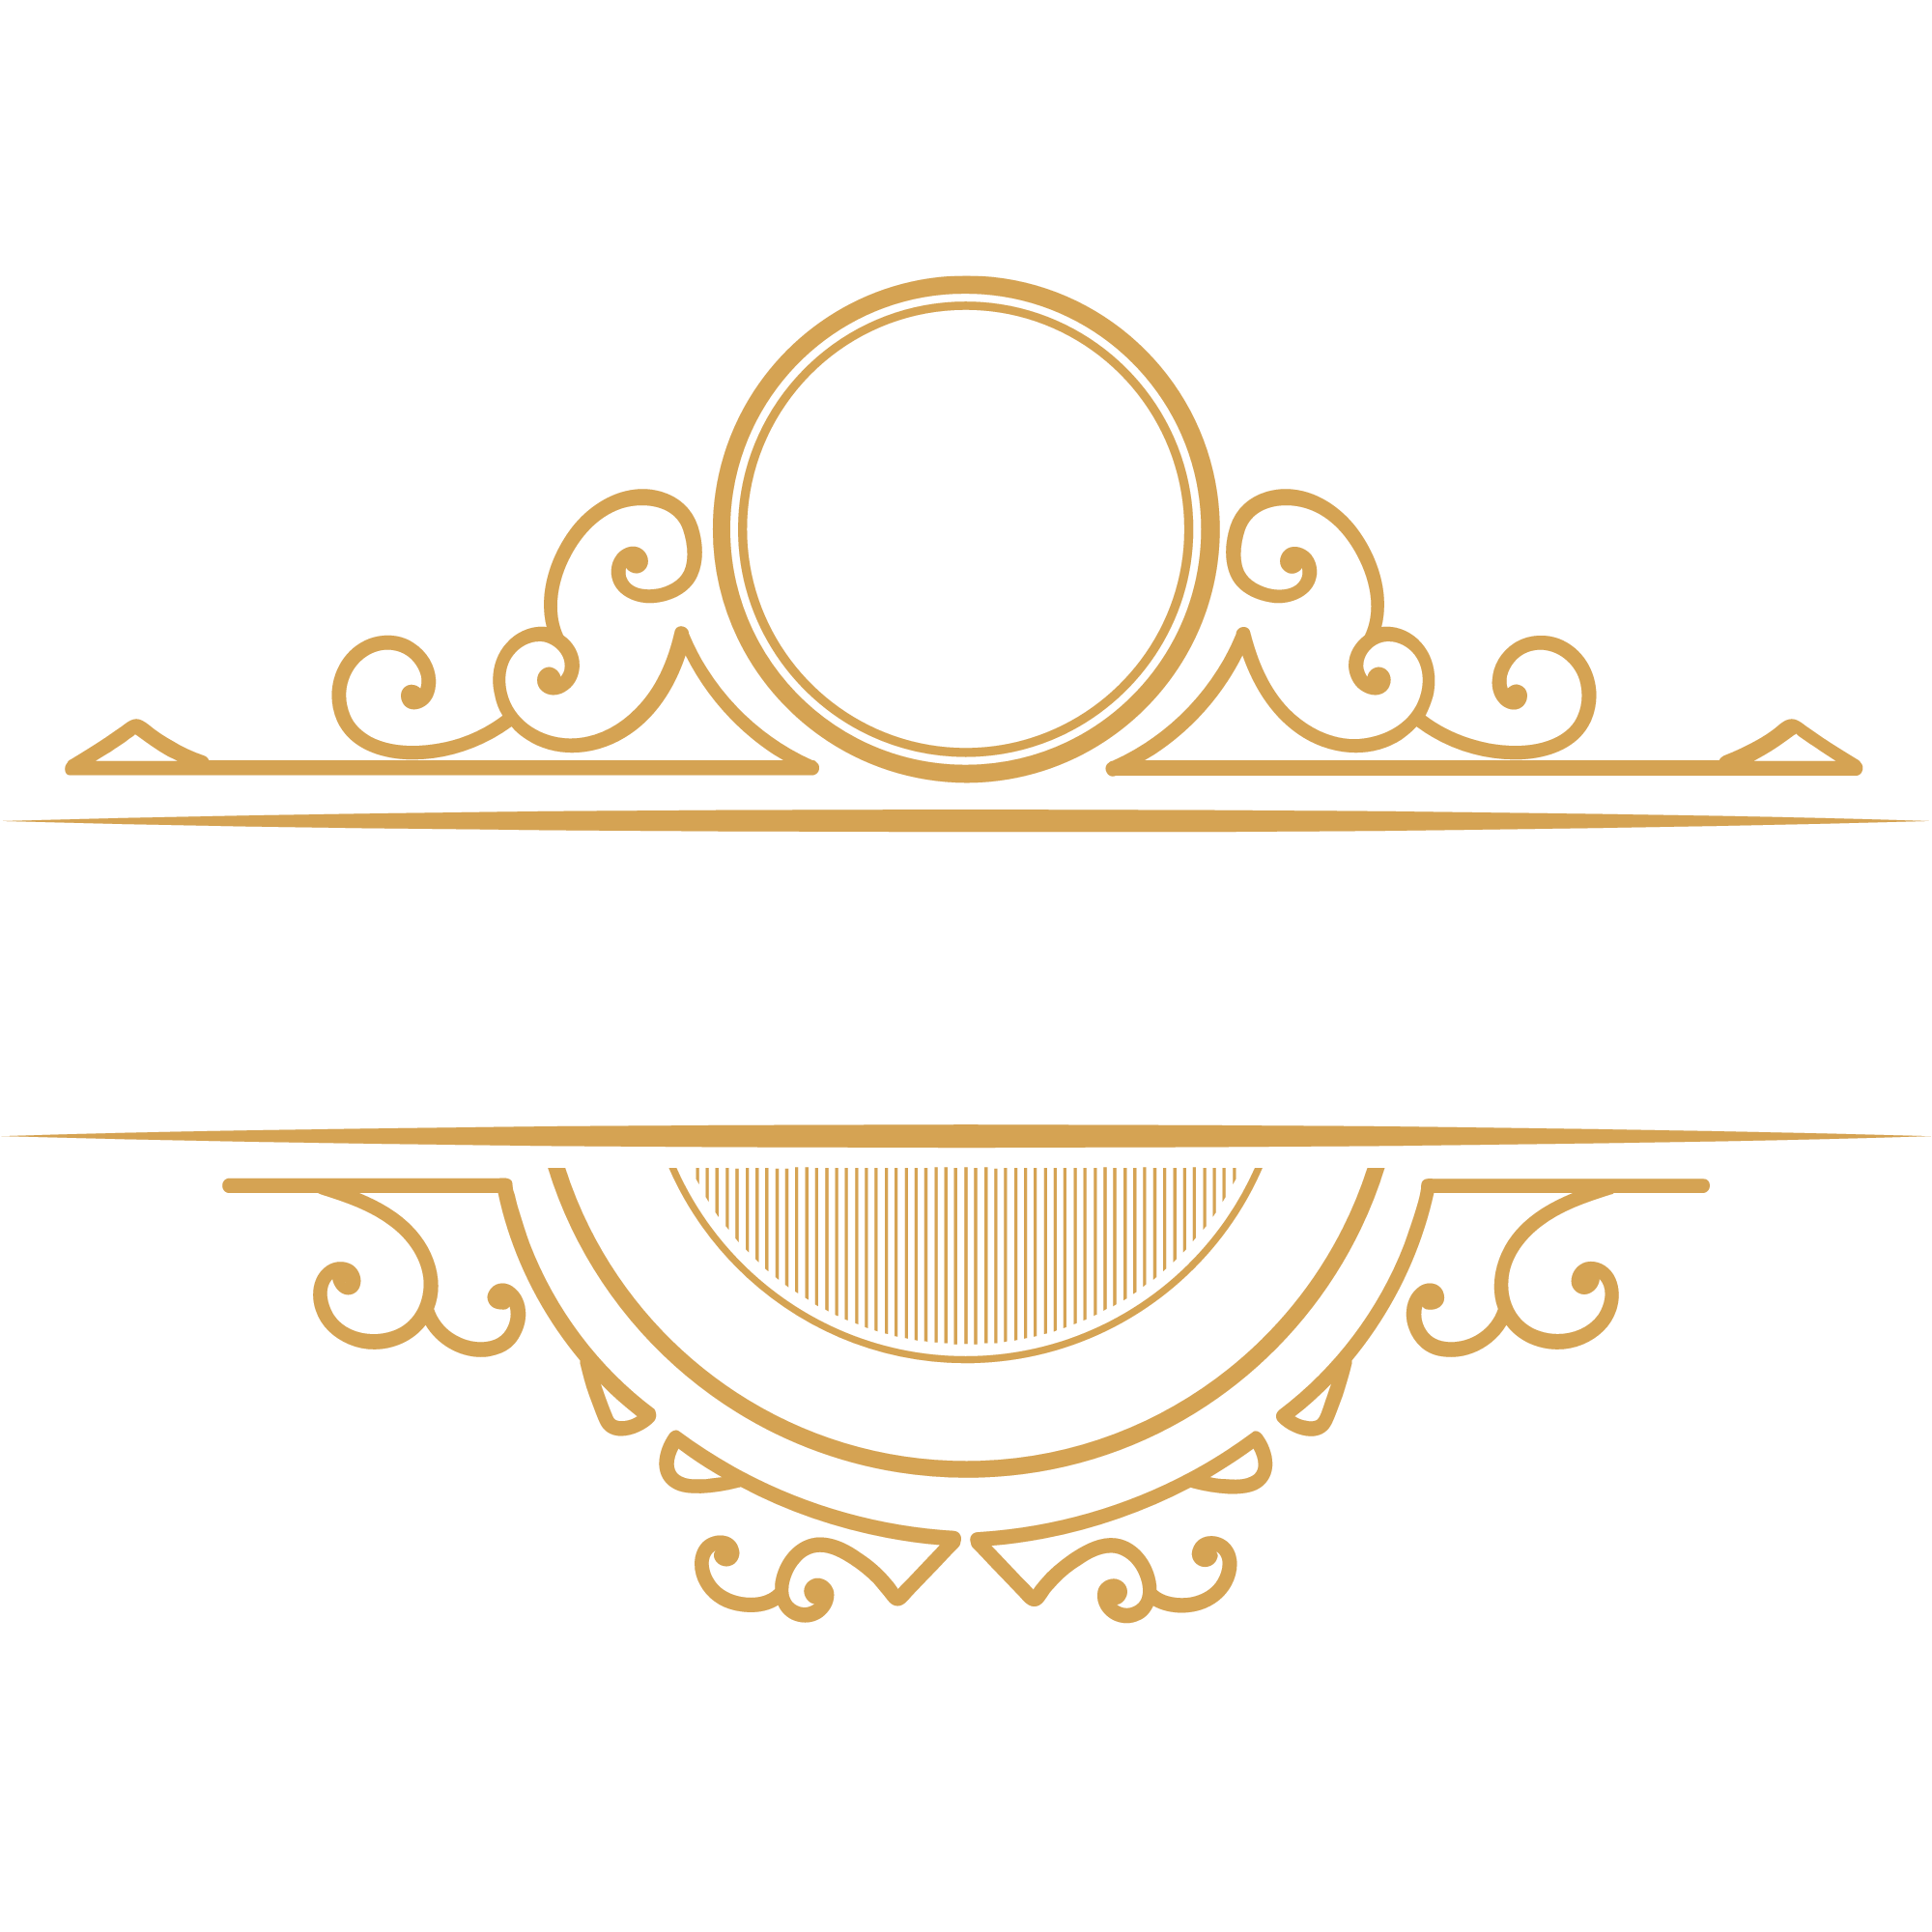 ChopShop 132